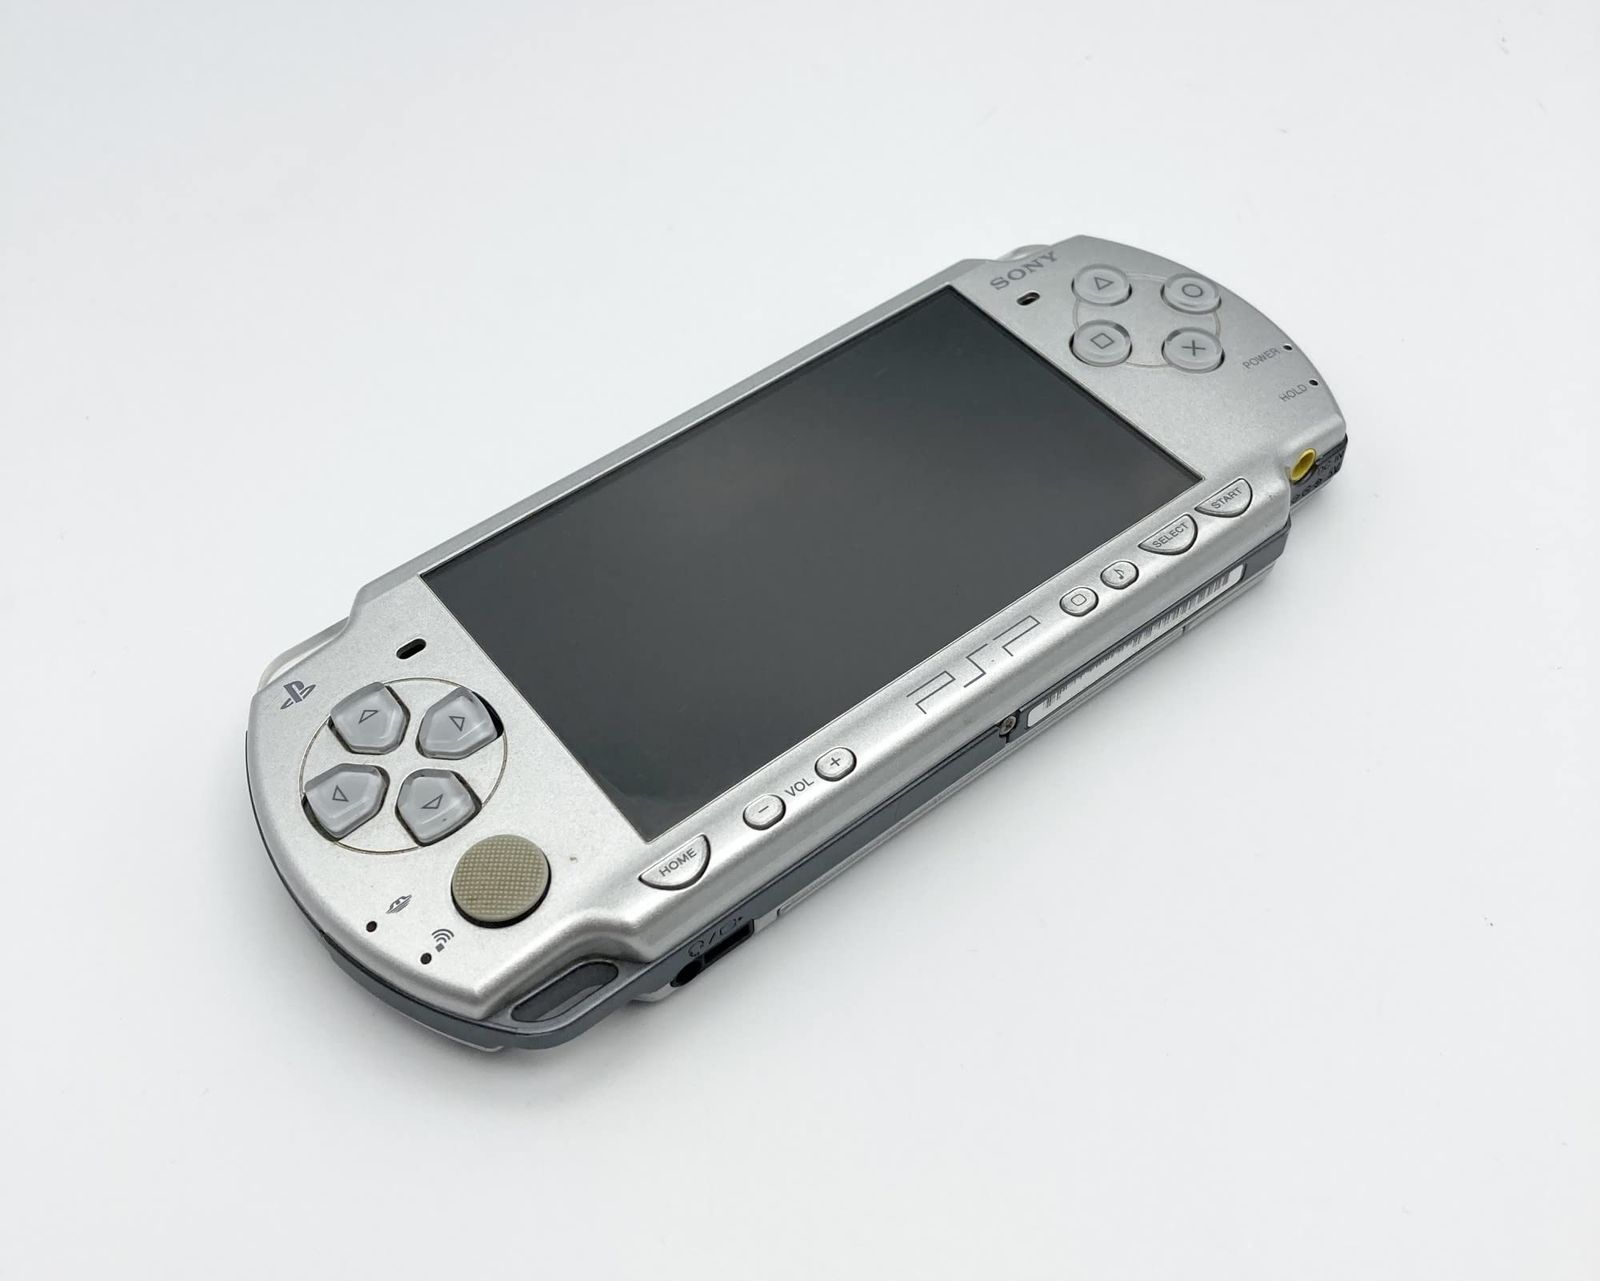 PSP「プレイステーション・ポータブル」 アイス・シルバー (PSP-2000IS 